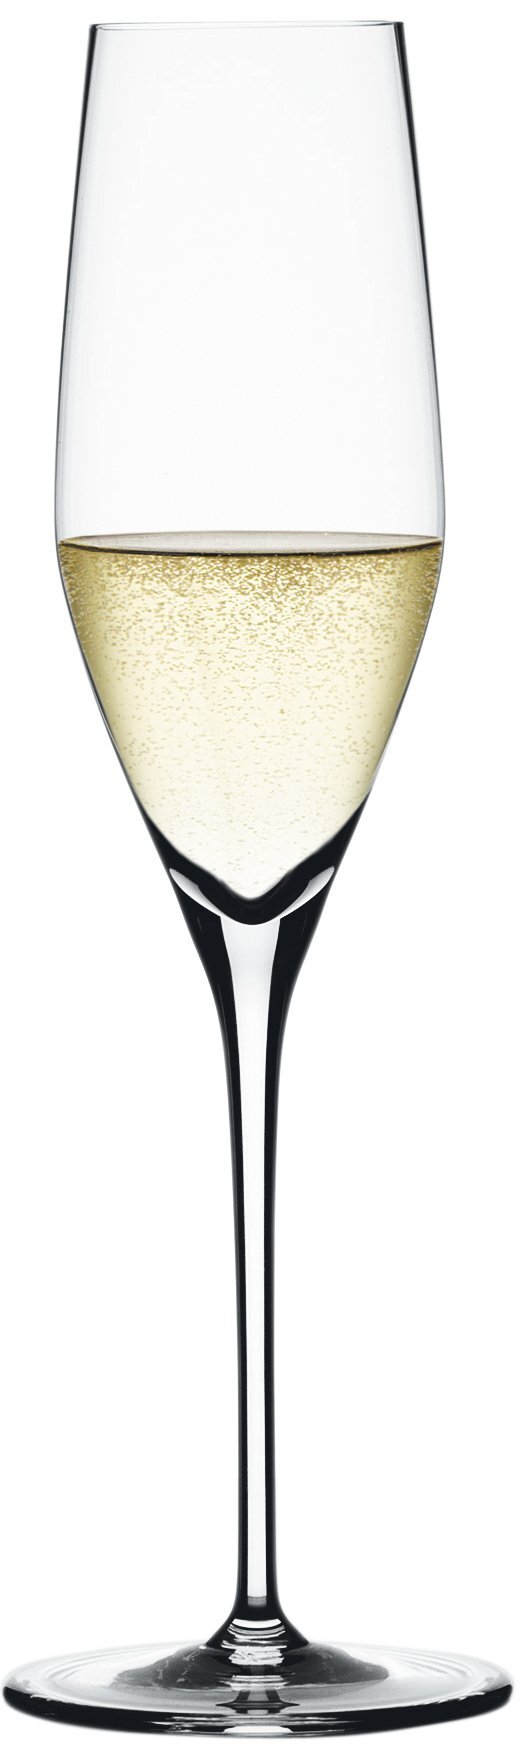 Spiegelau Authentis champagneflute - set van 4